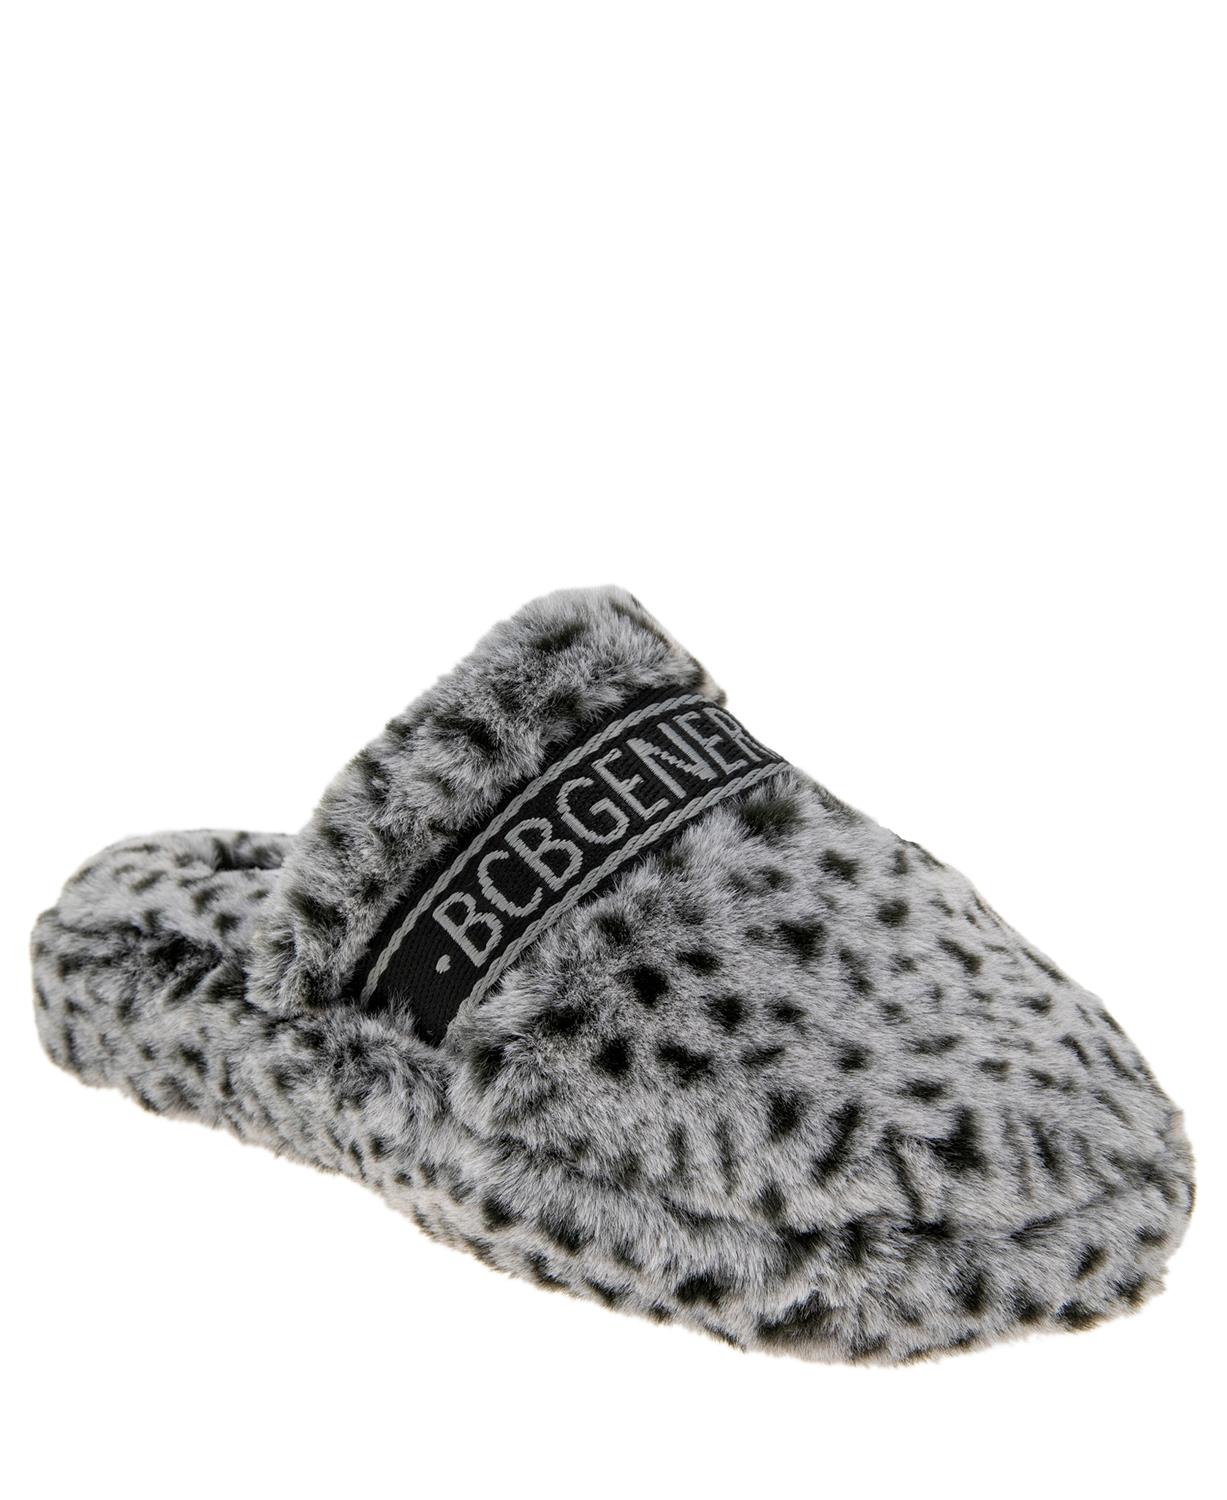 Bcbgeneration Sashaa Faux Fur Slipper In Black Multi Cheetah